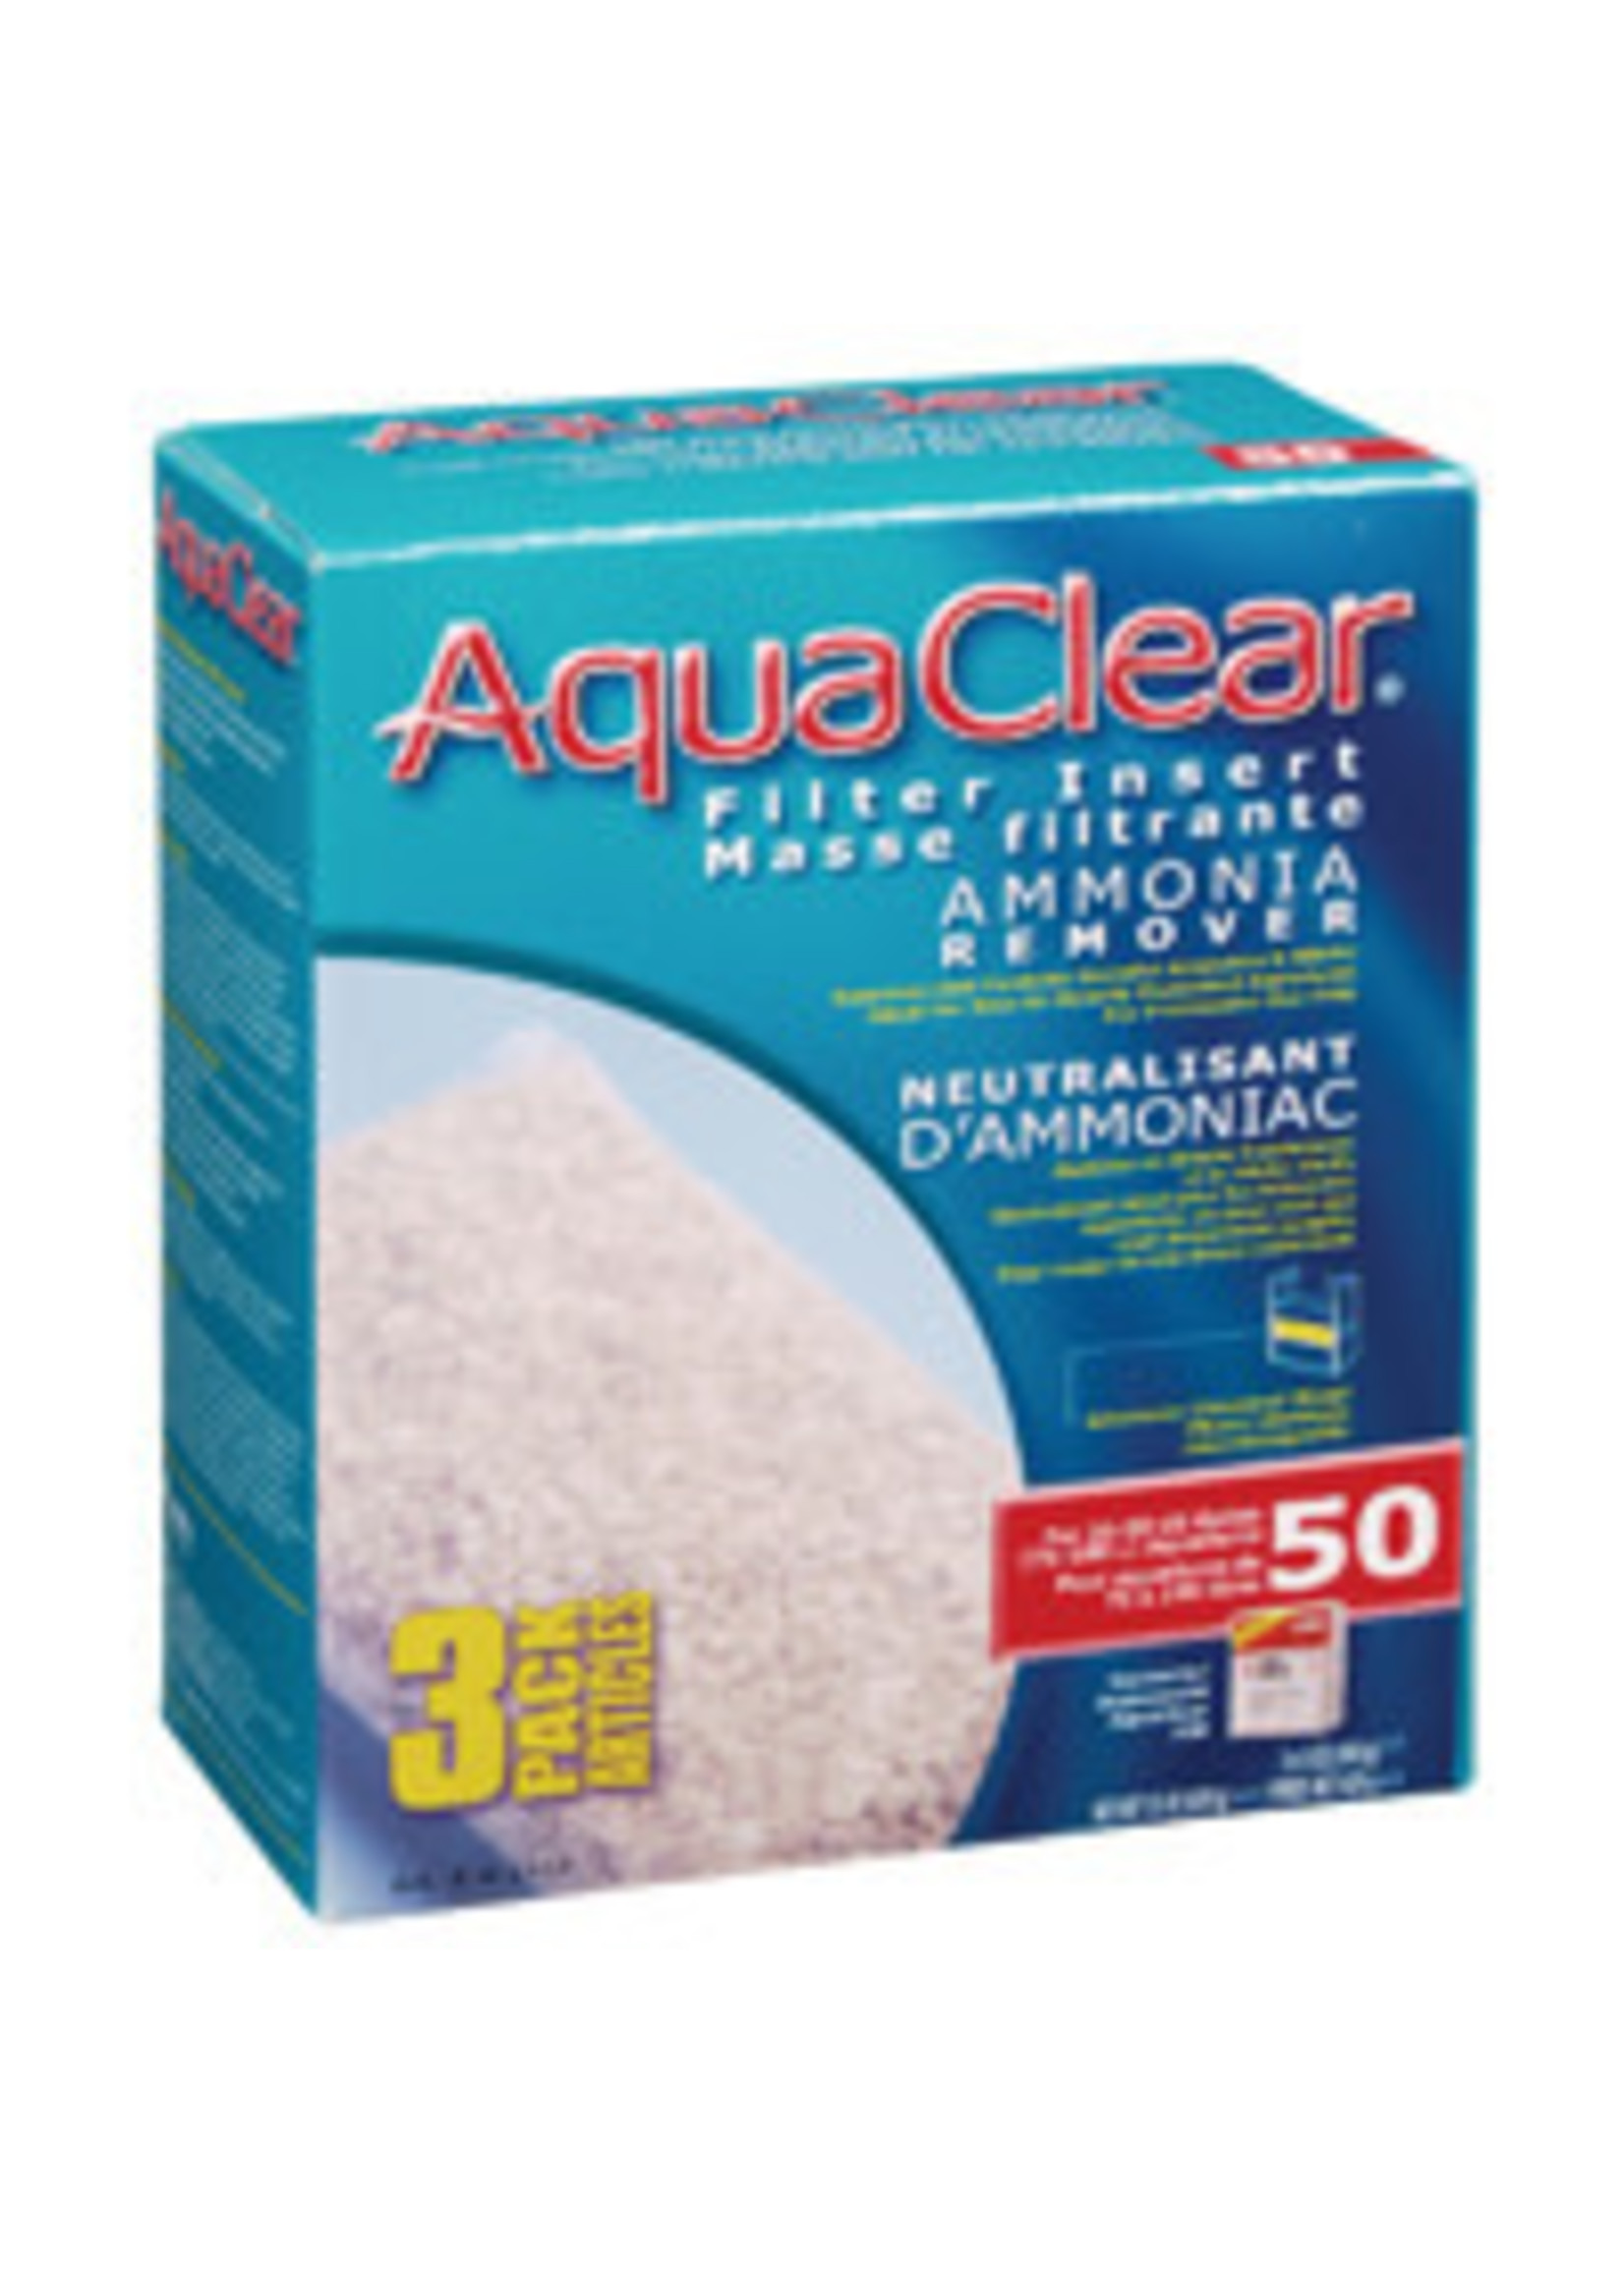 AquaClear AquaClear - 50 Ammonia Remover Filter Insert 3 pack, 429 g (15 oz)